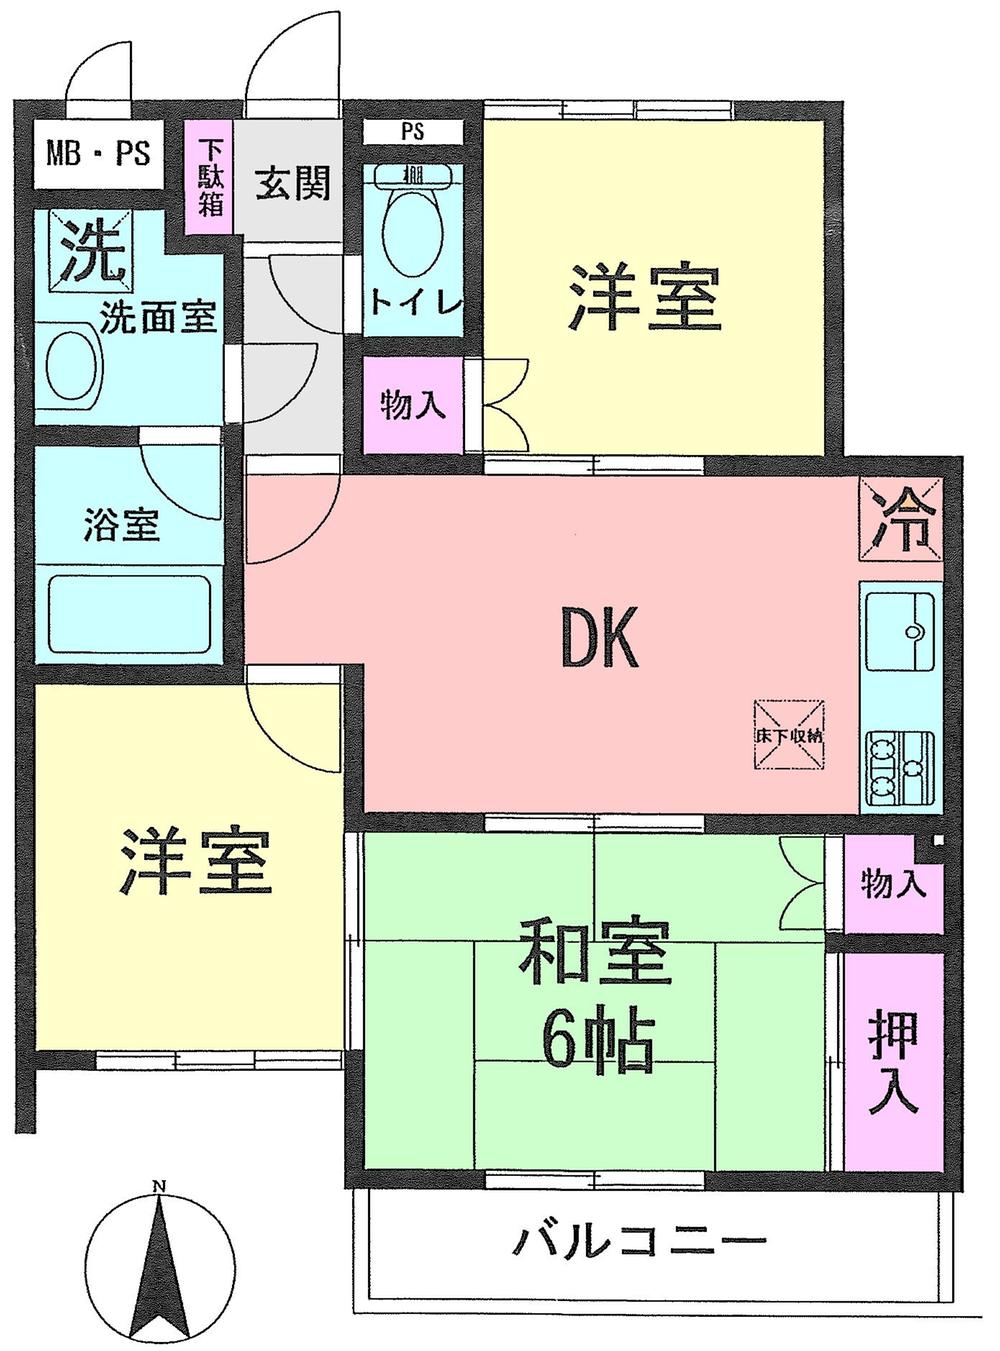 Floor plan. 3DK, Price 14.8 million yen, Occupied area 52.52 sq m , Balcony area 4.31 sq m